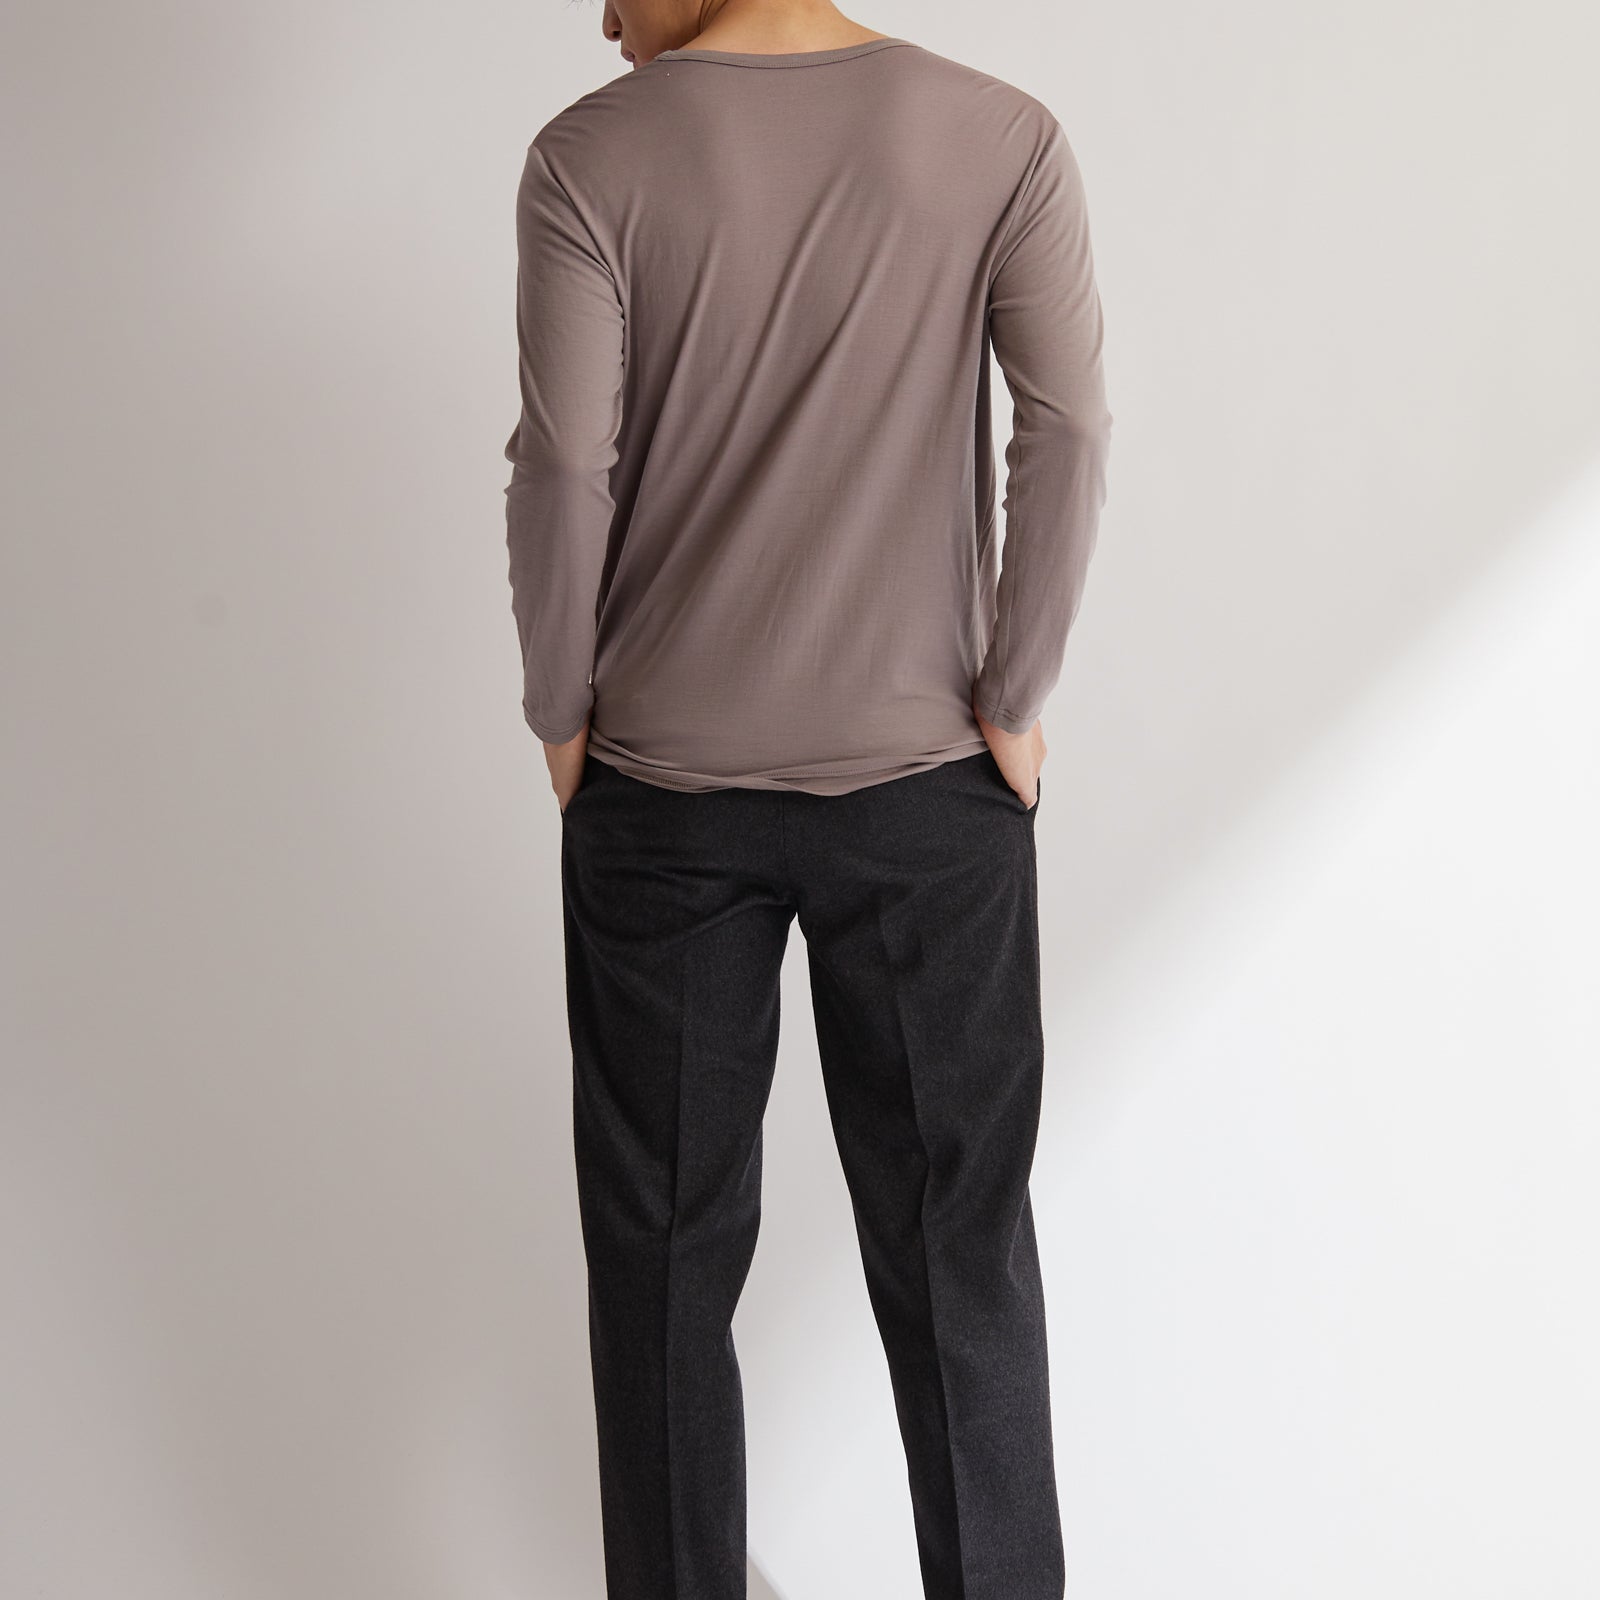 Men's 100% Merino Wool Jersey V-Neck Long Sleeve Tee in Taupe